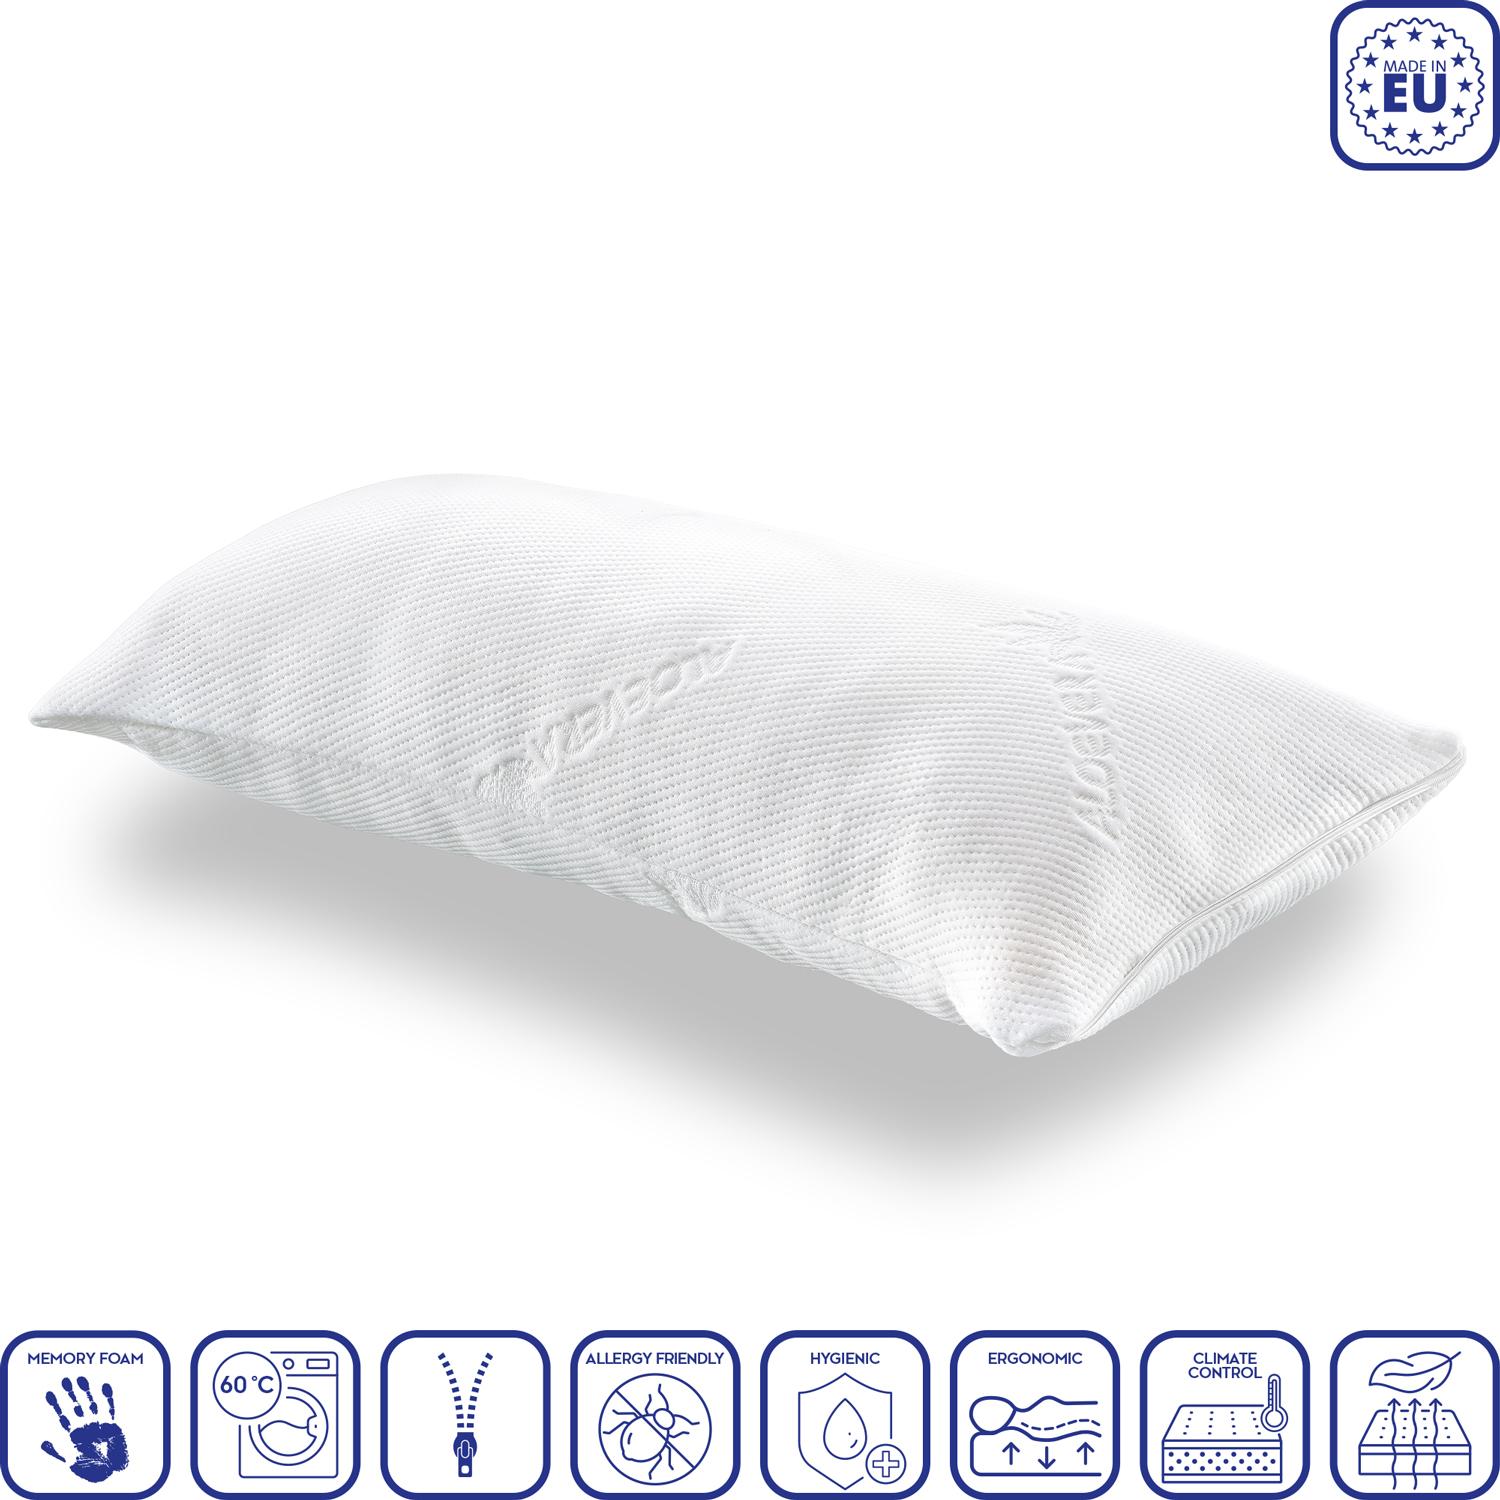 CloudComfort Viskoelastik Komfort-Schlaf-Kissen 40 x 80 cm